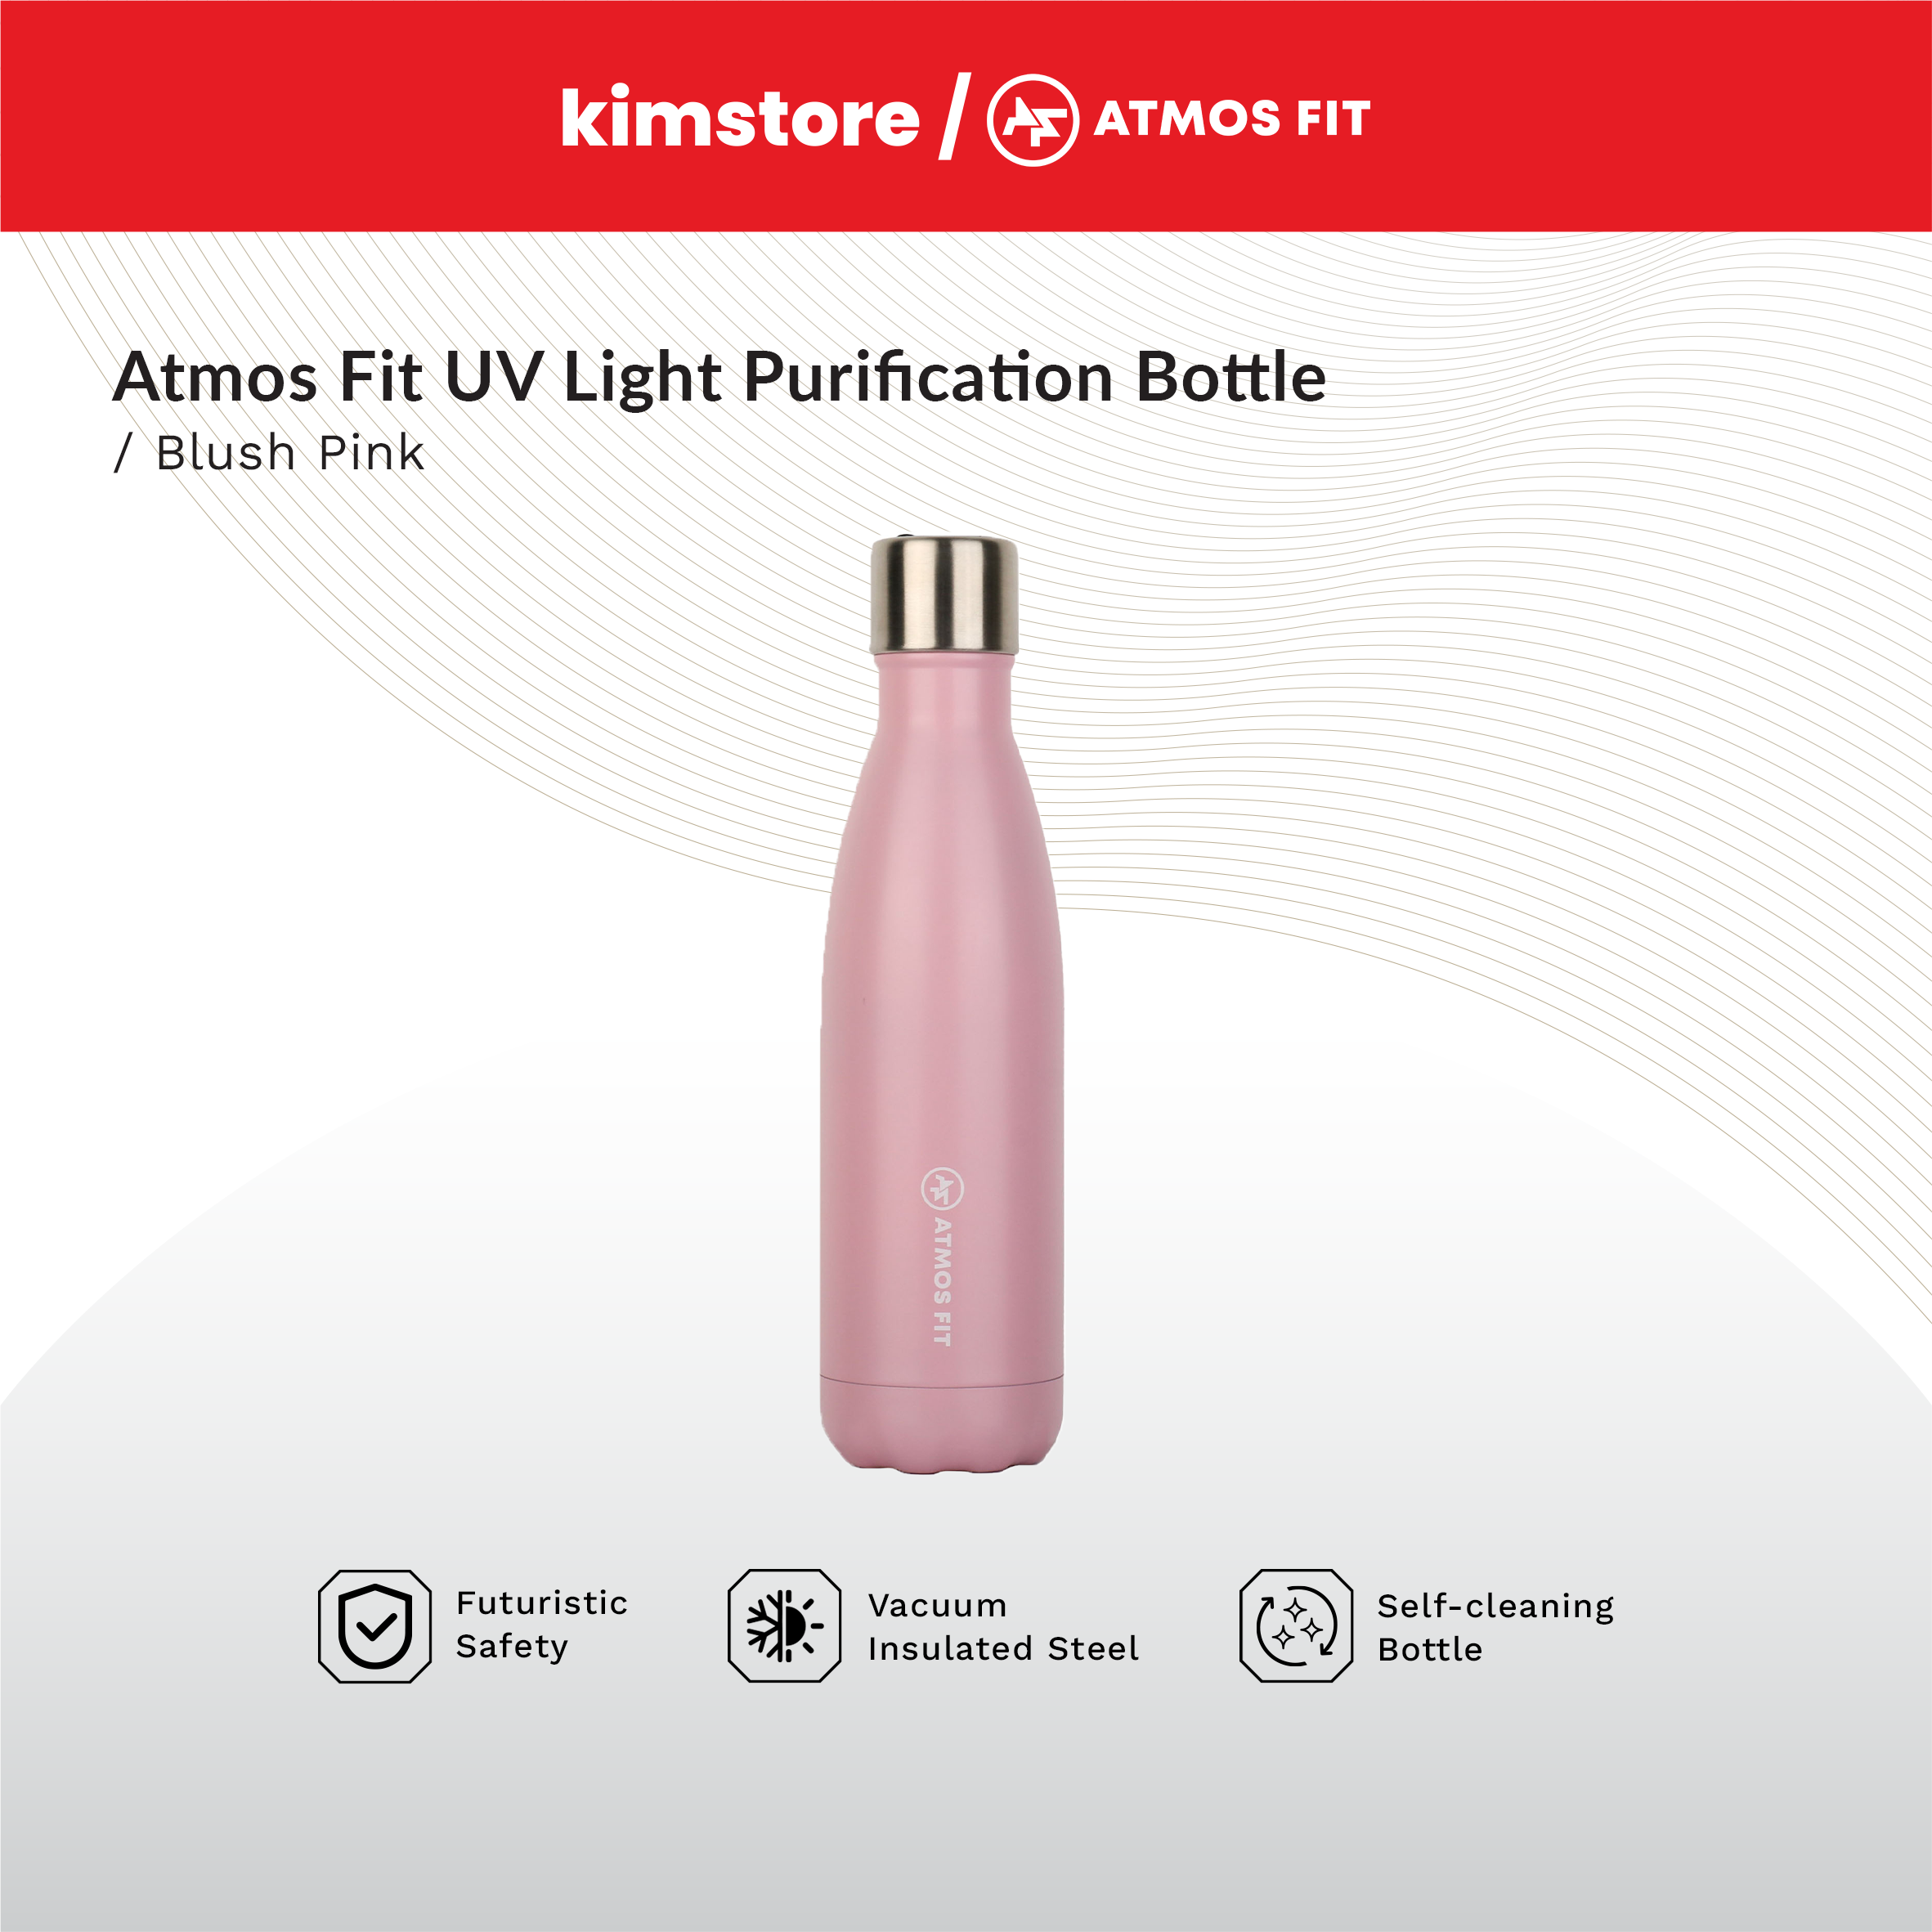 ATMOS FIT UV Light Purification Bottle